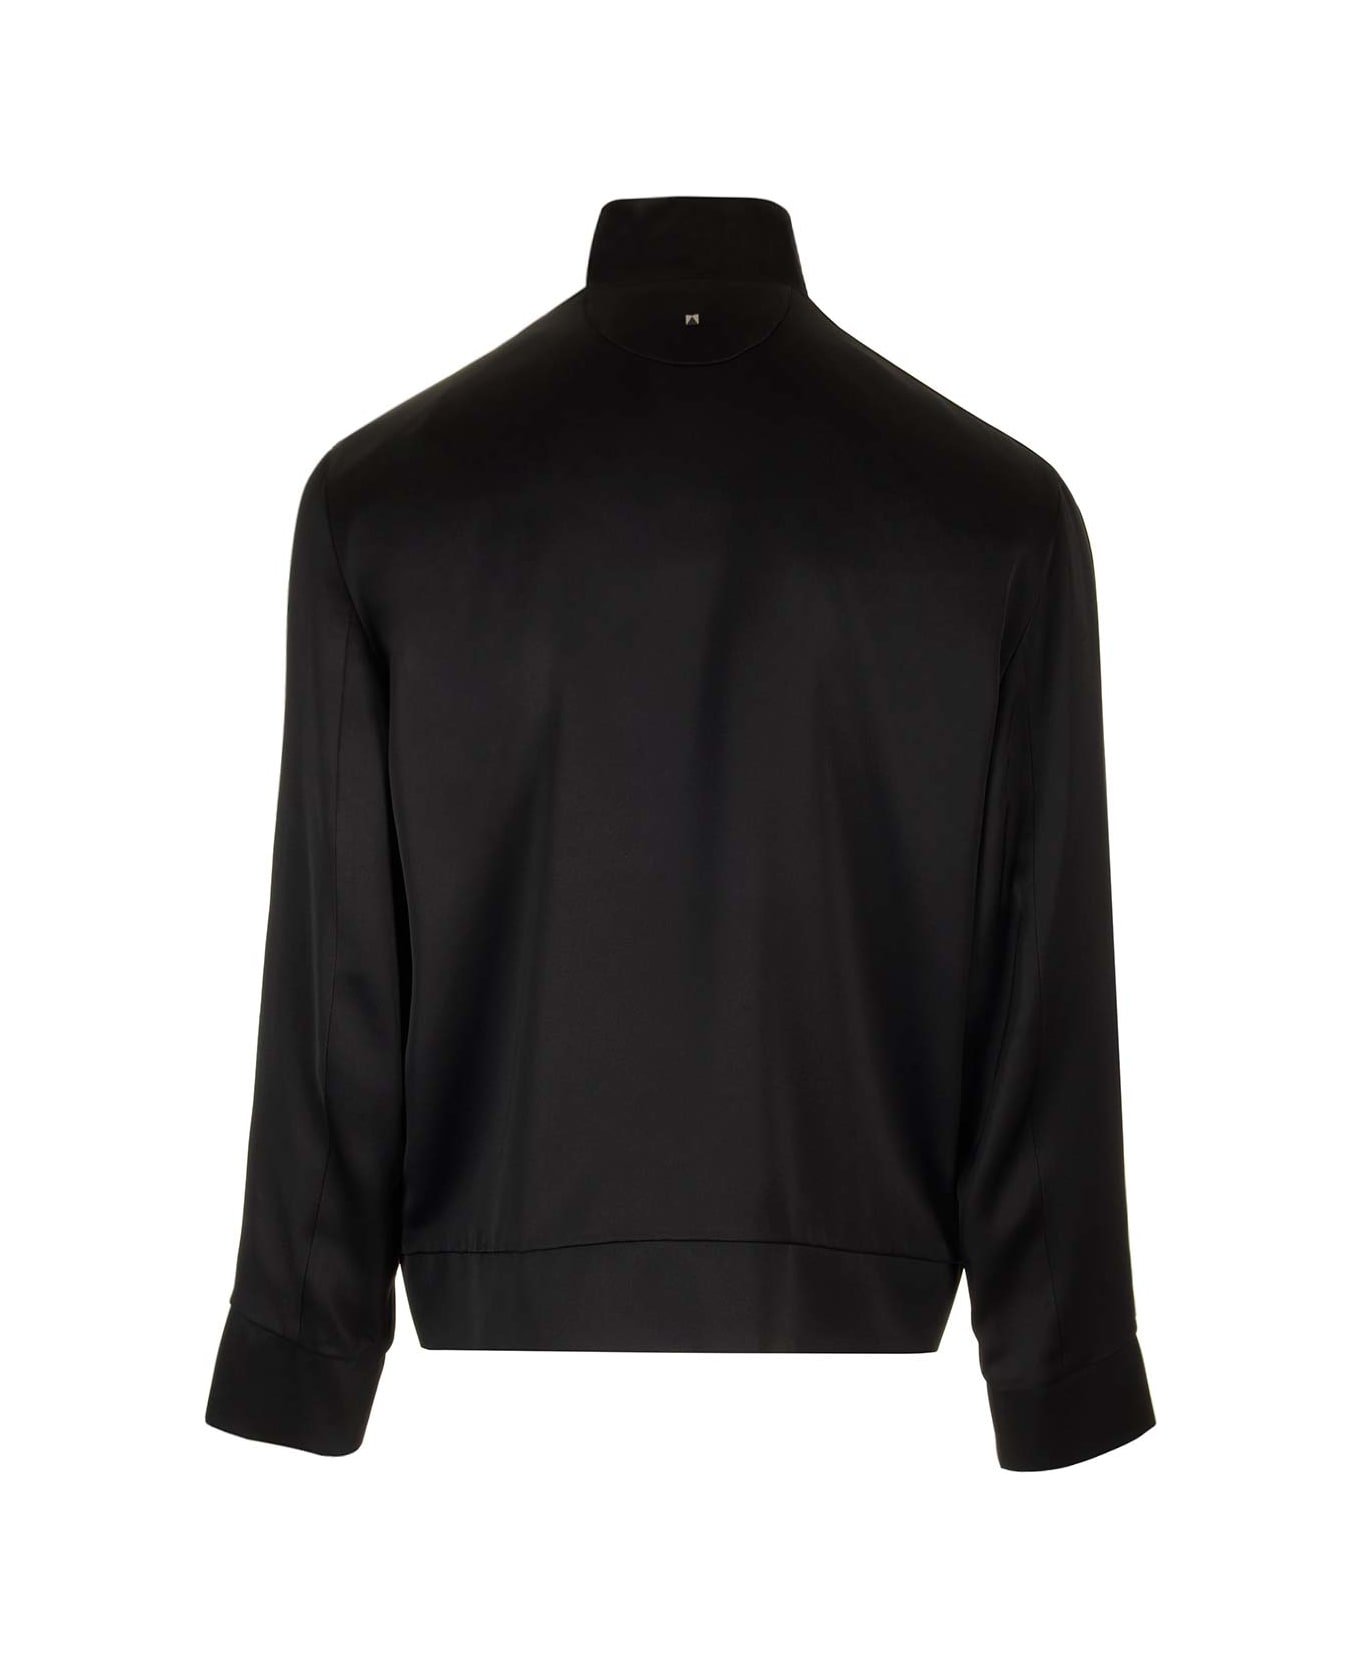 Valentino Black Enver Satin Acetate Jacket - Black